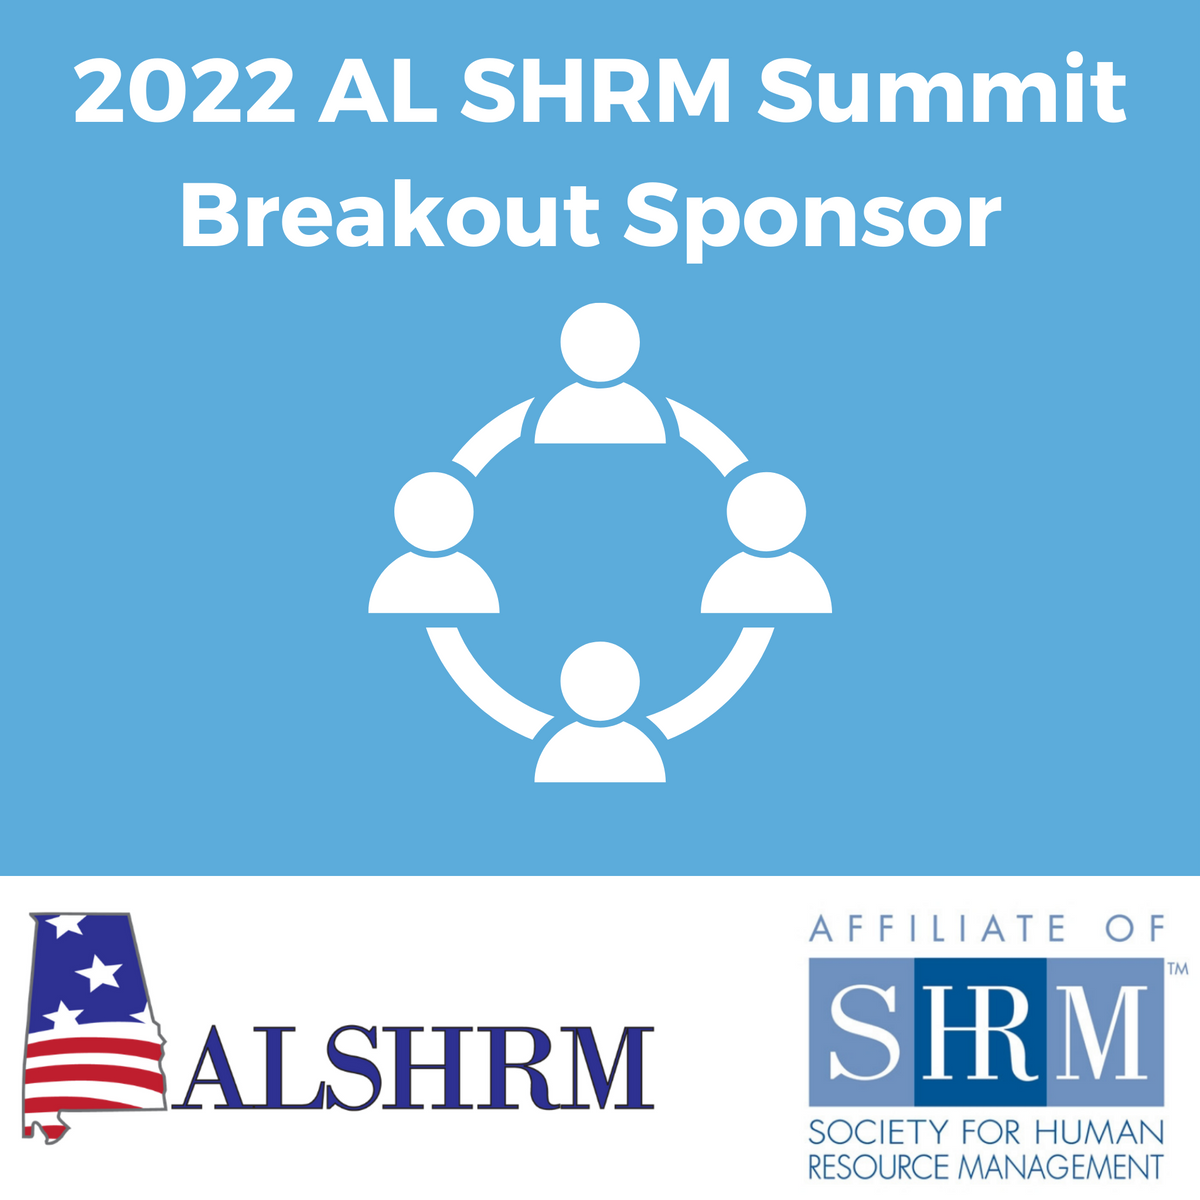 2022 AL SHRM Summit Breakout Sponsor